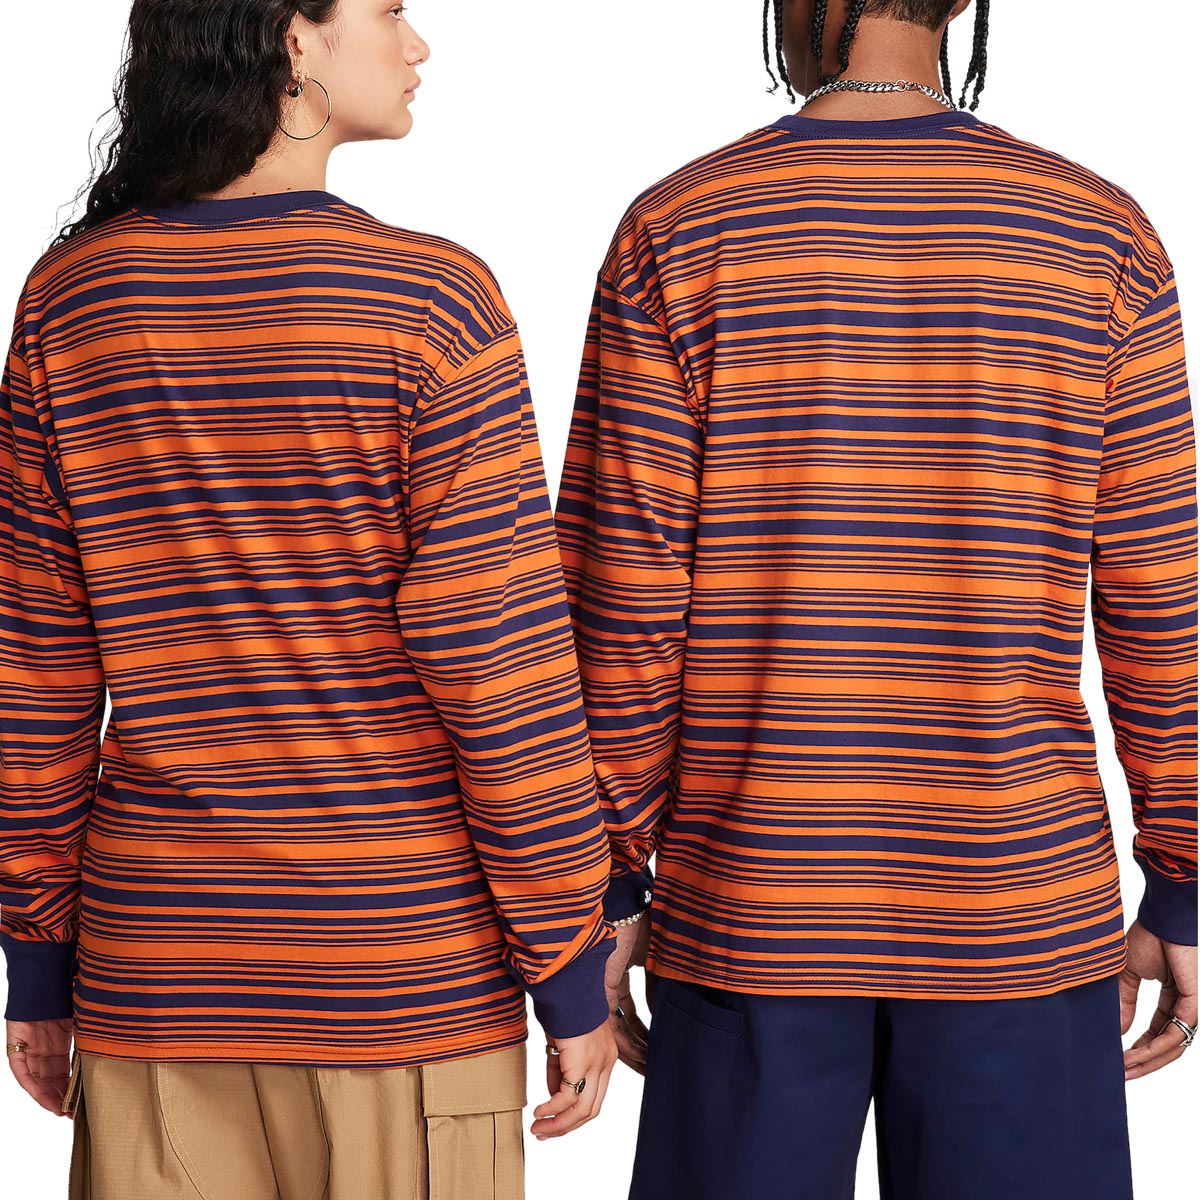 Nike SB Long Sleeve Striped T-Shirt - Purple Ink/Campfire Orange image 3